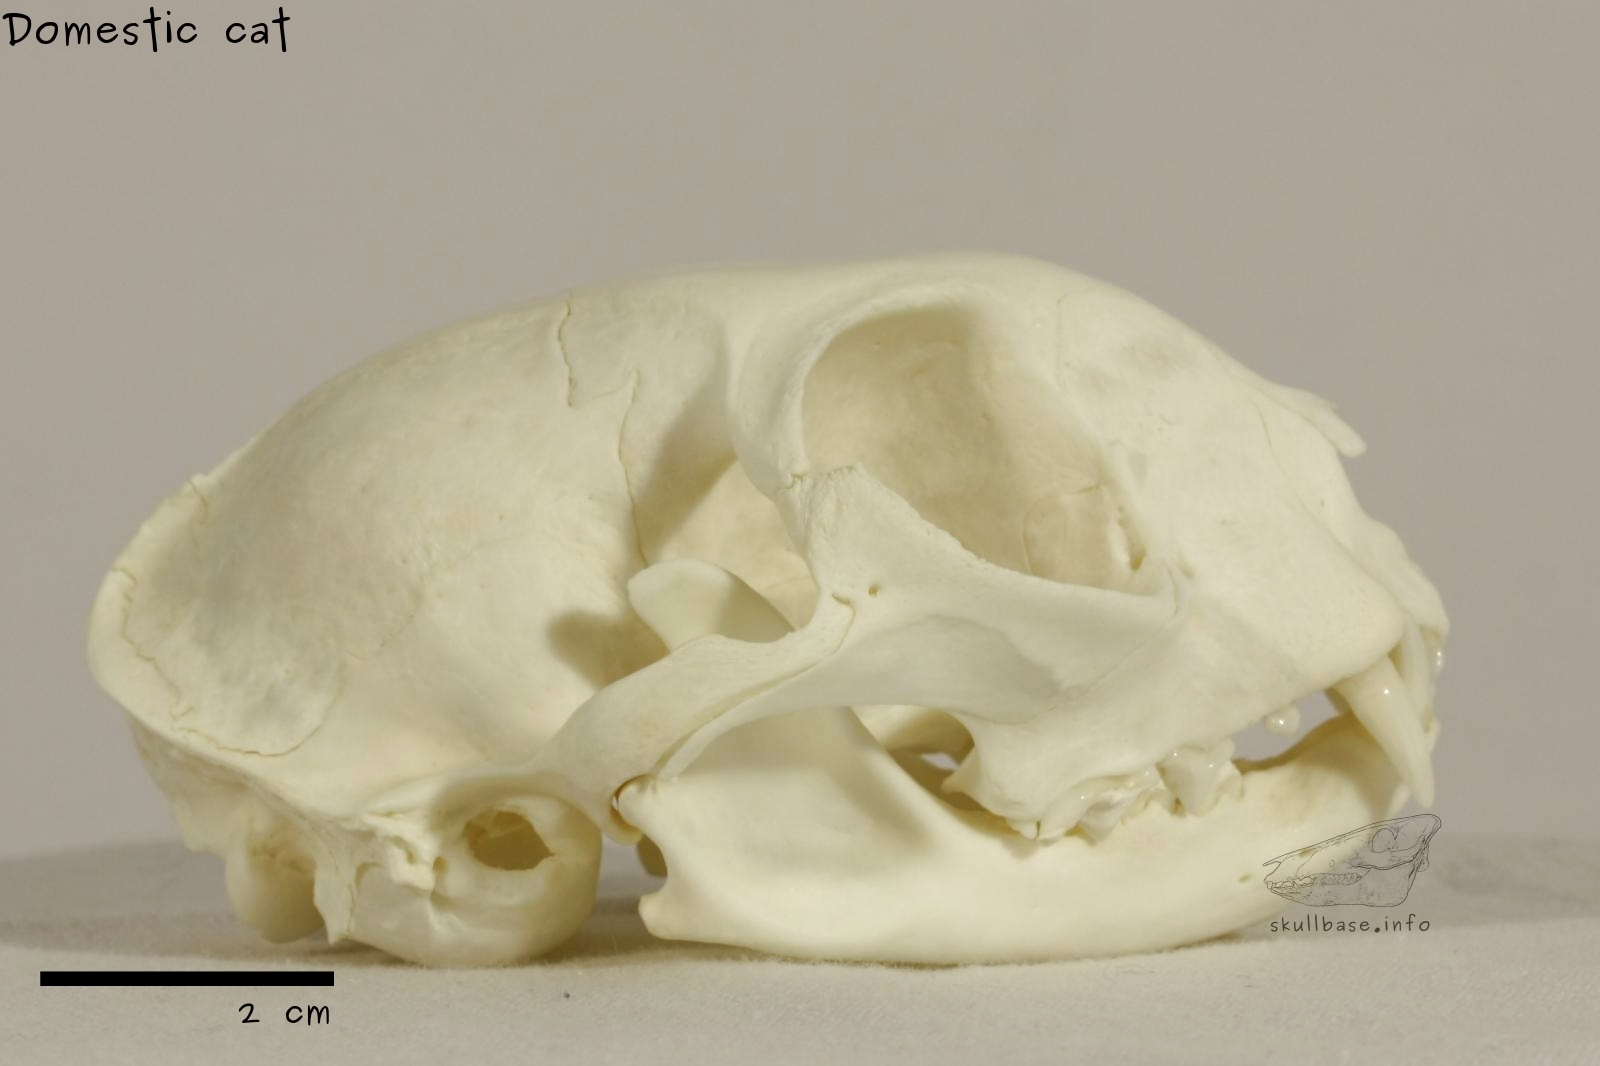 Domestic cat (Felis catus) skull lateral view